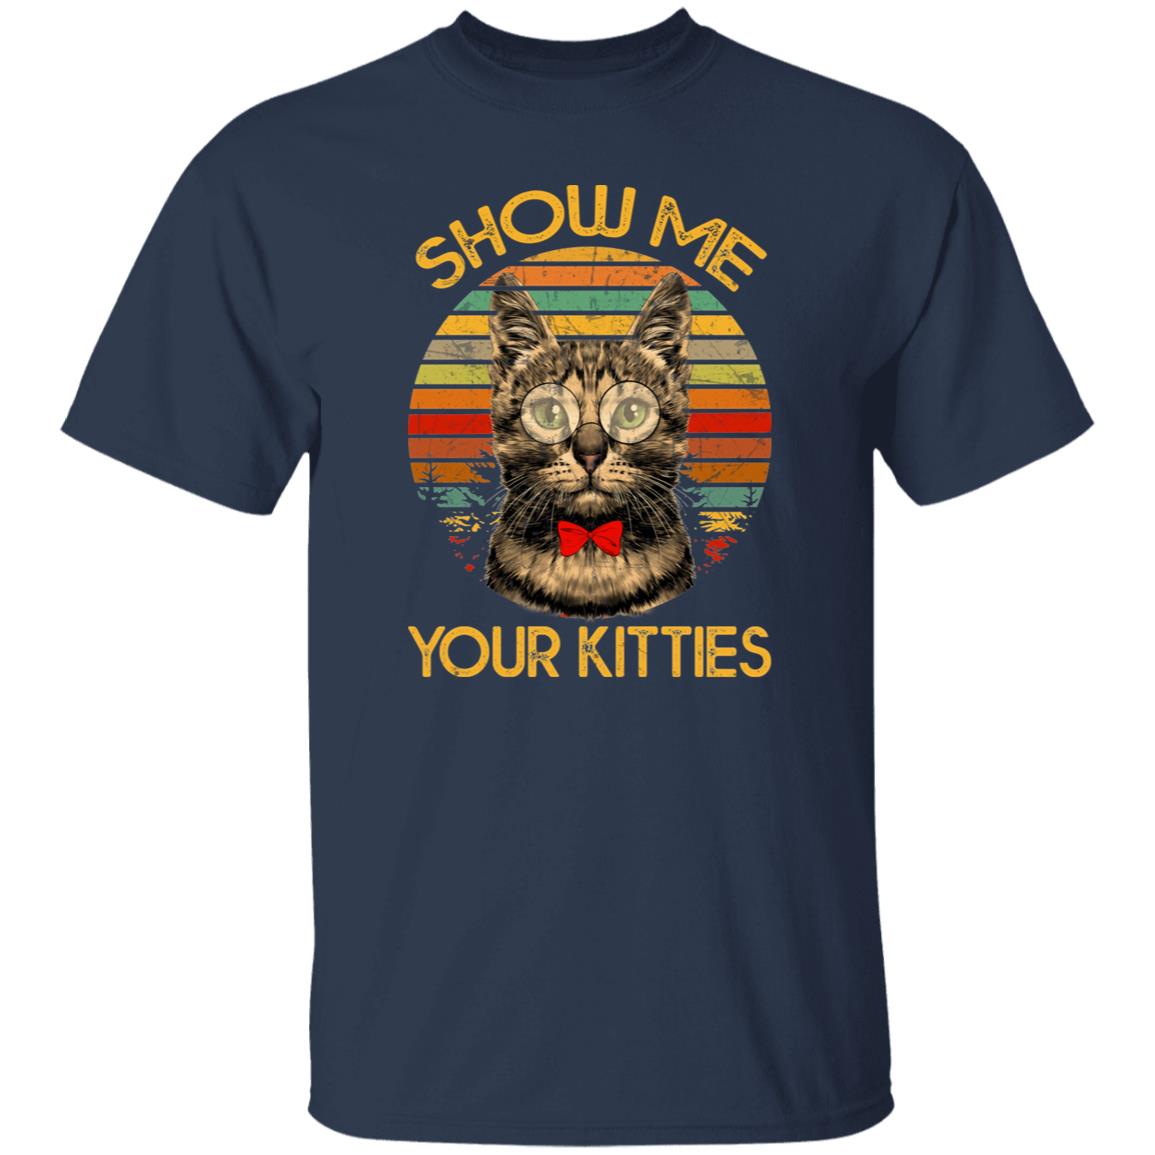 Show me your kitties T-Shirt gift Retro Cat mom Cat dad Unisex Tee Black Navy Dark Heather-Navy-Family-Gift-Planet